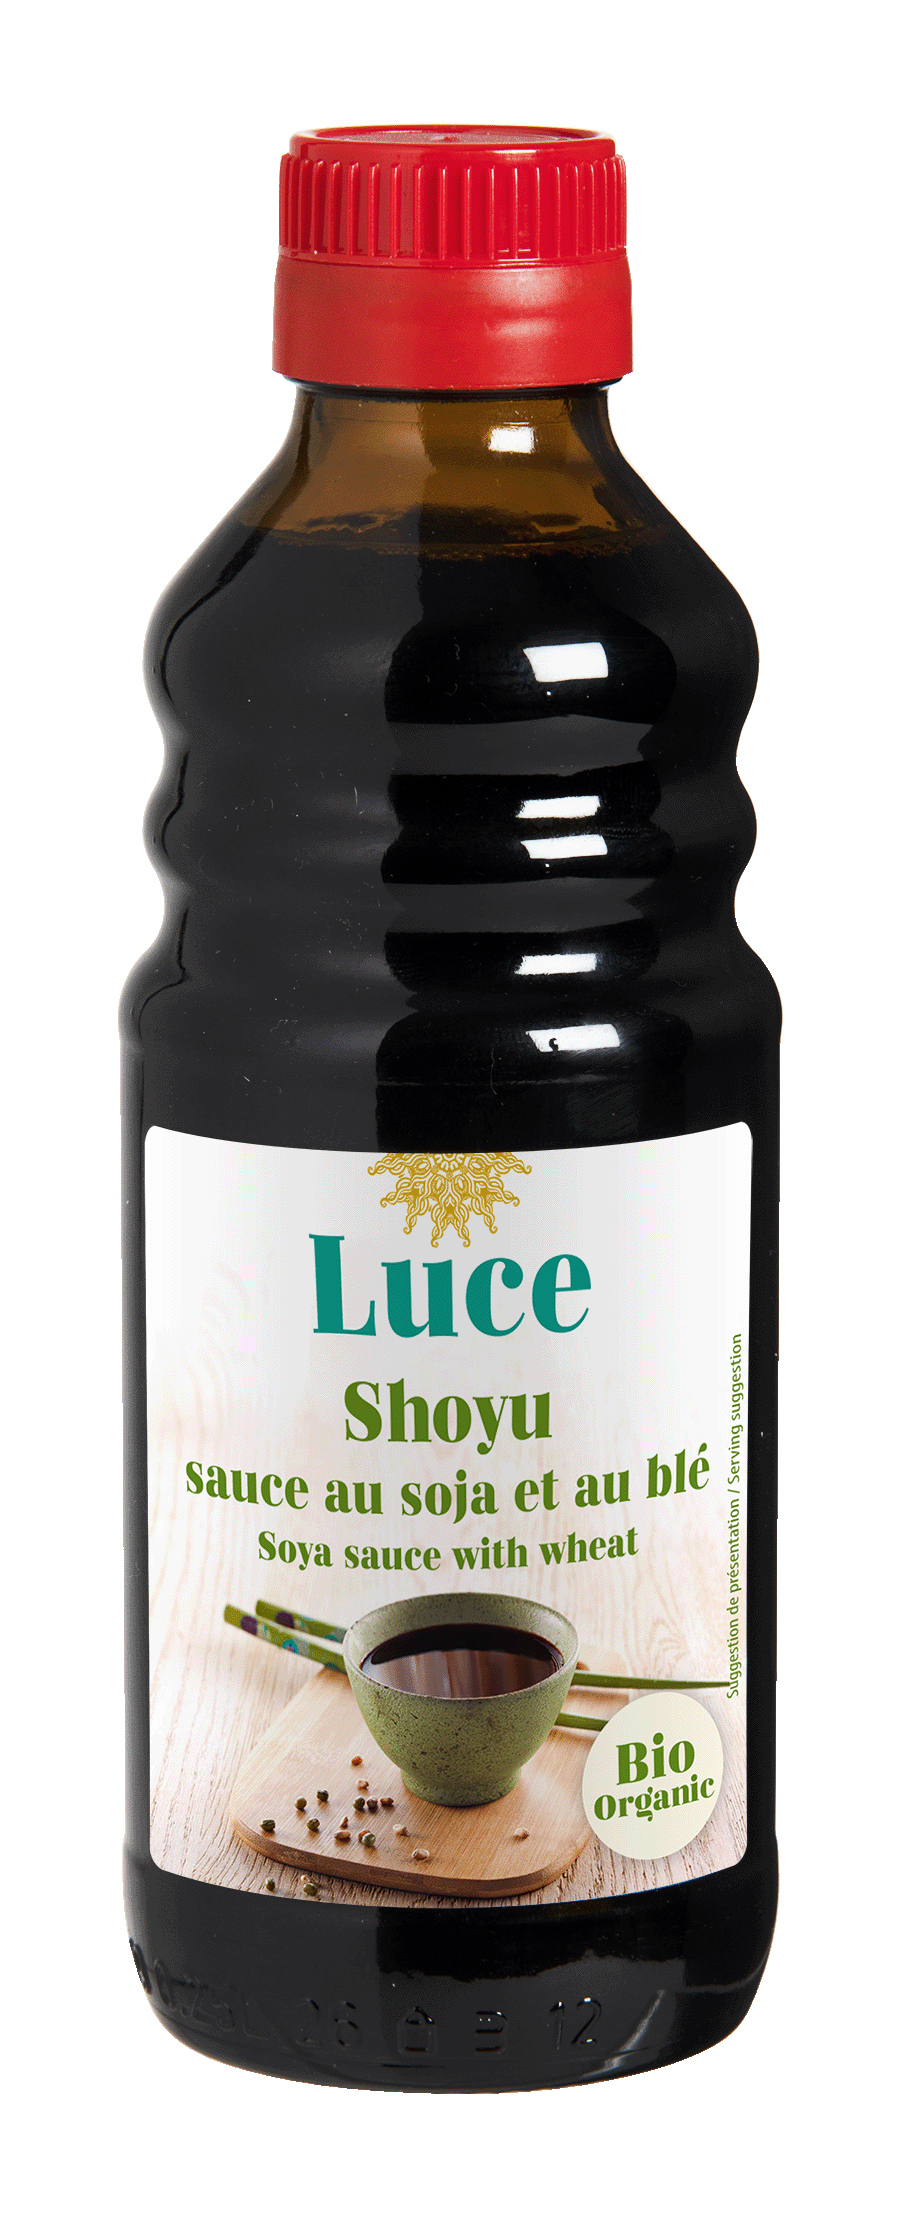 Shoyu - soy sauce and wheat